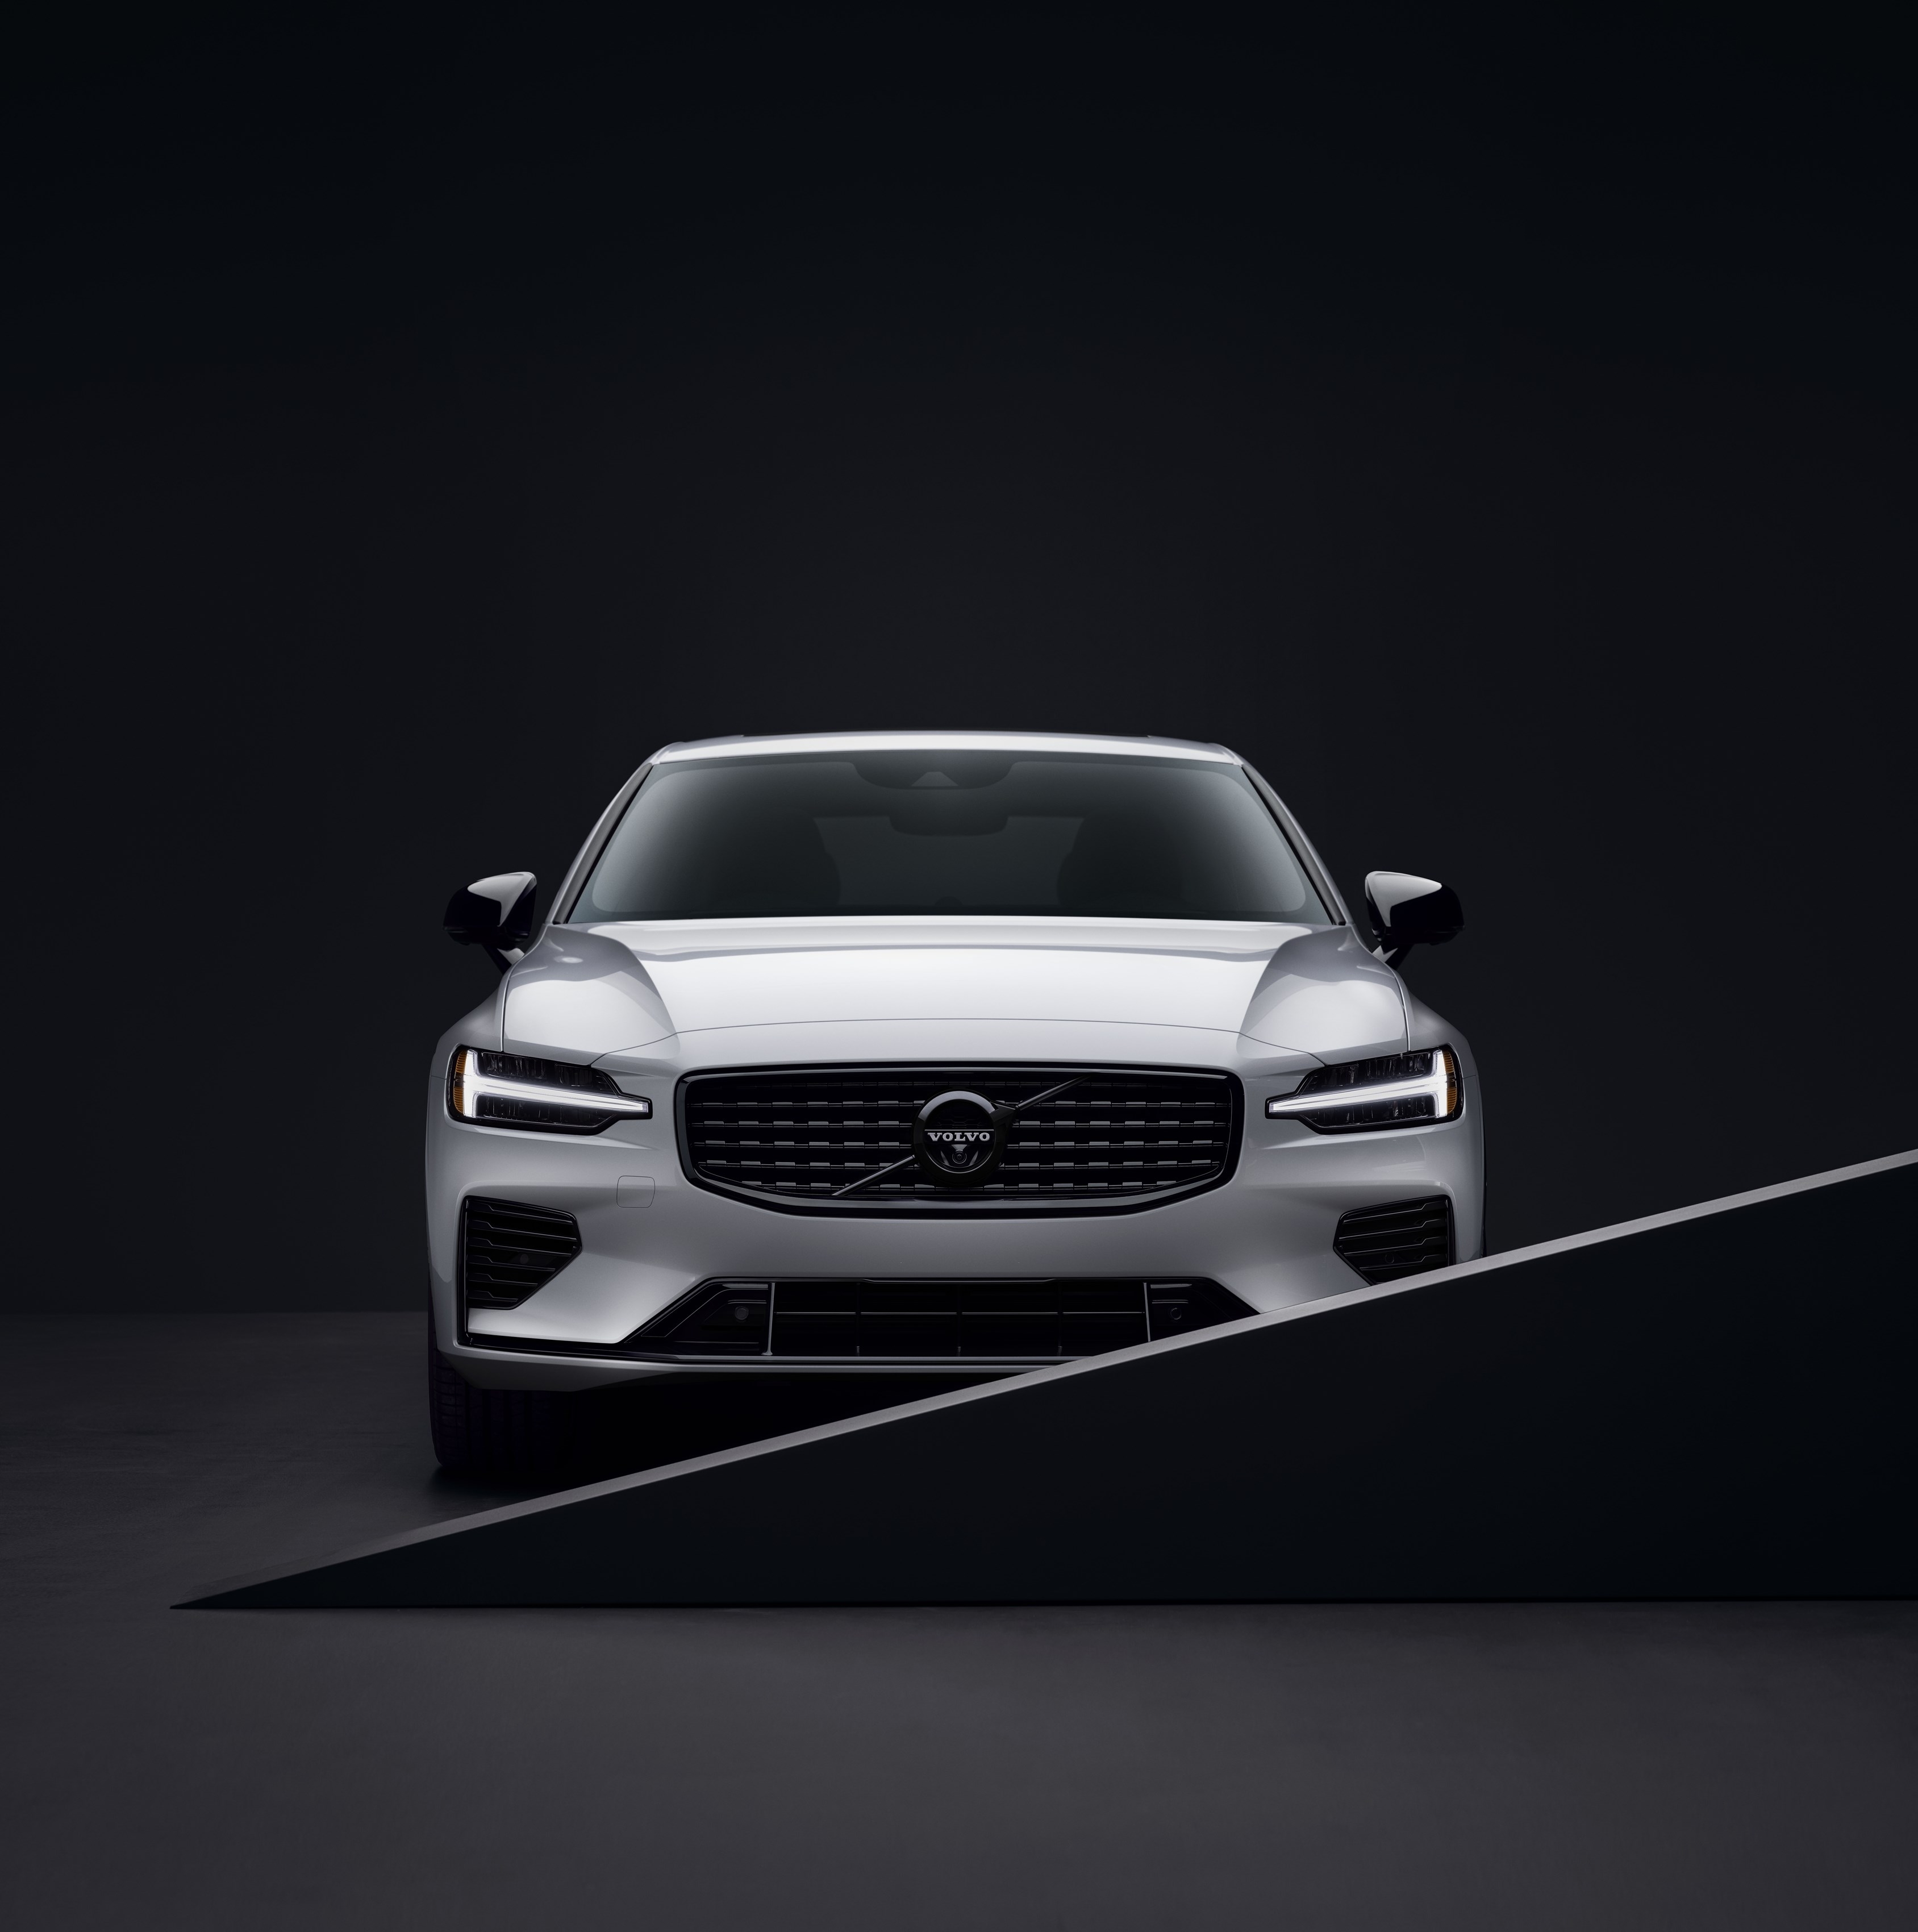 Volvo’s S60 Sedan Receives Limited “Black Edition”